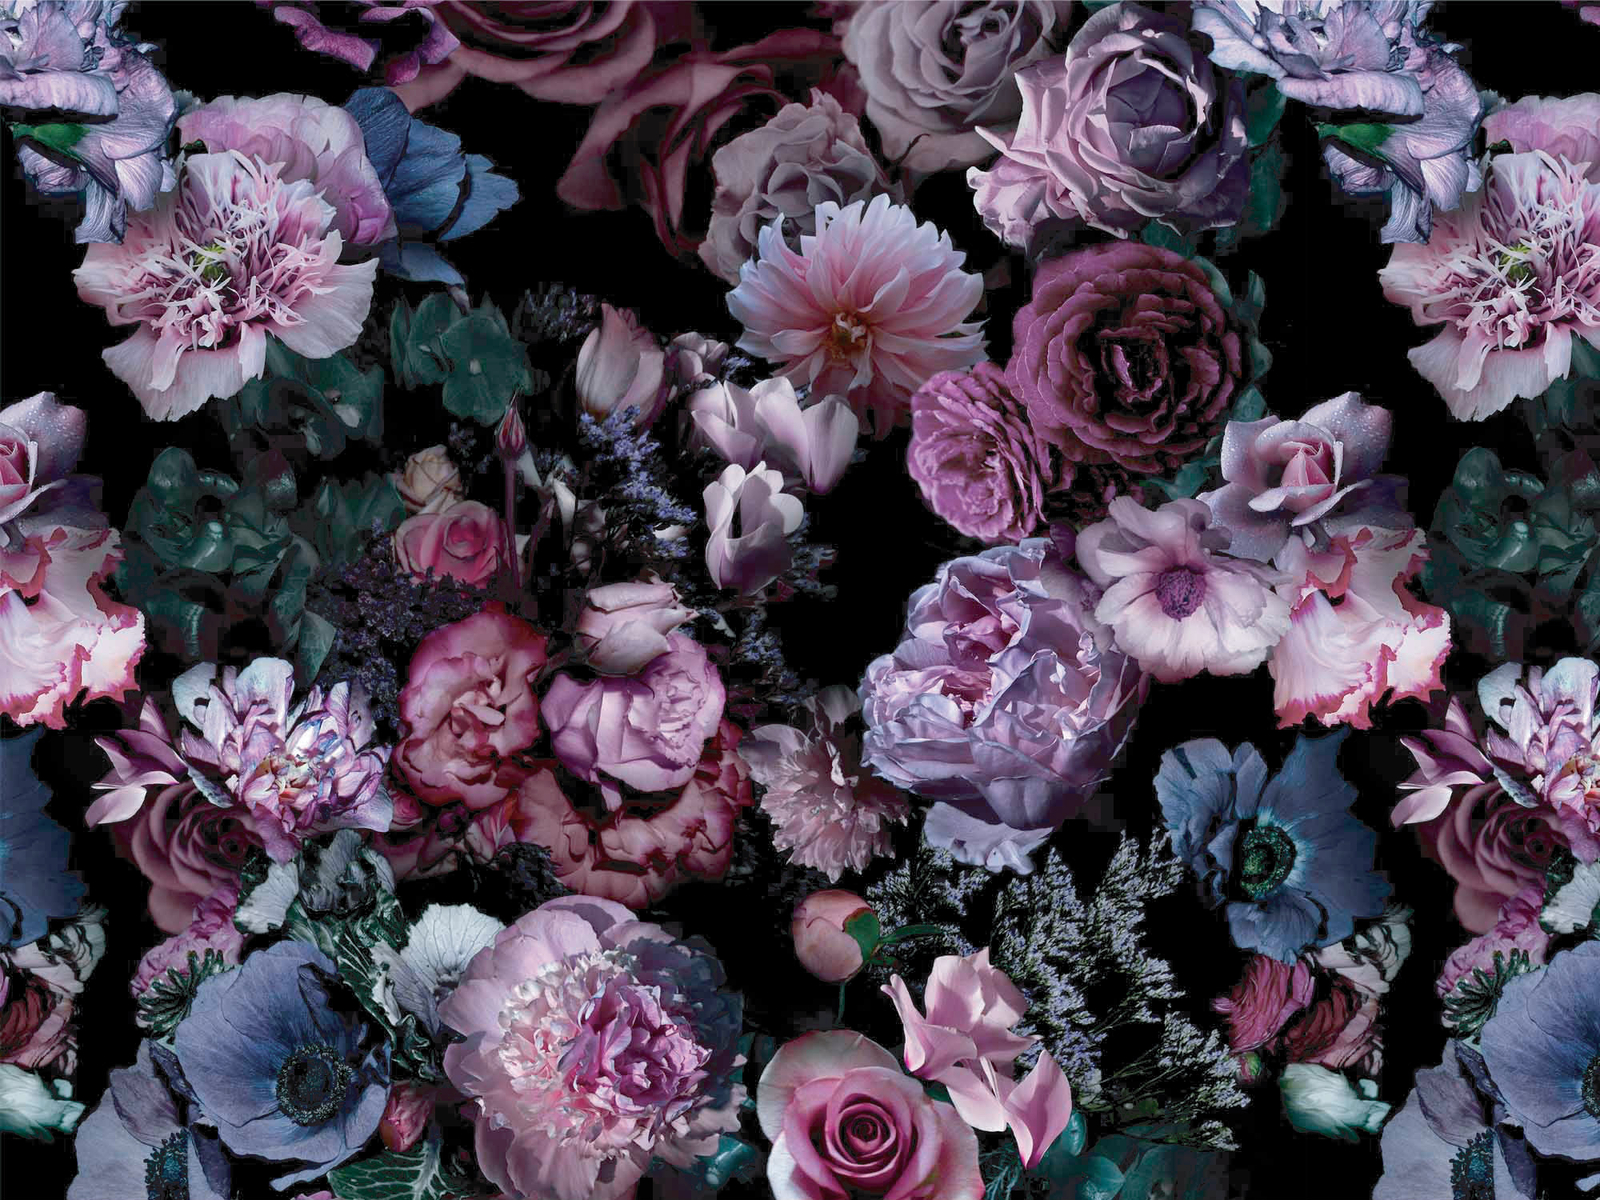 Textile Patterns: Digital Floral Prints by Janine Prevost on Dribbble